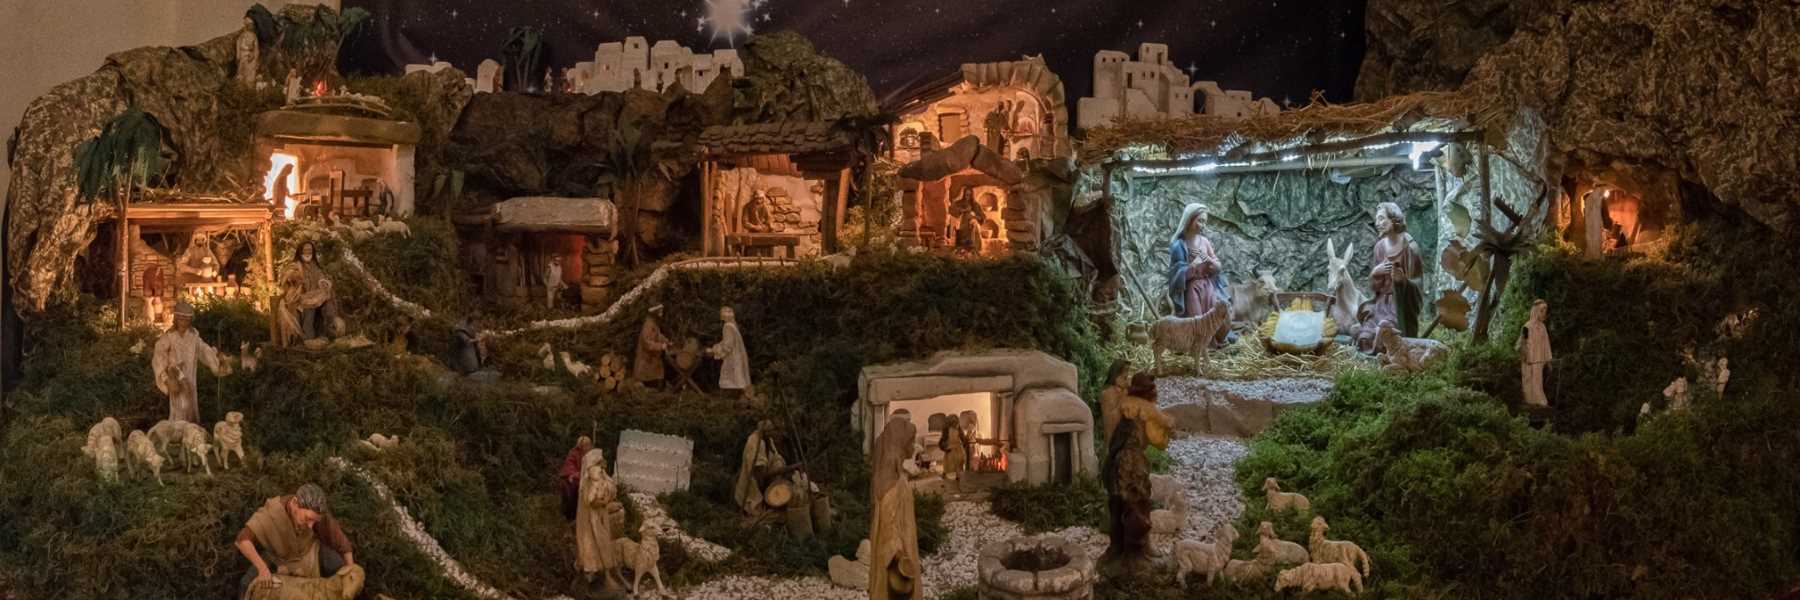 Animated Nativity scene in Cervia Cathedral